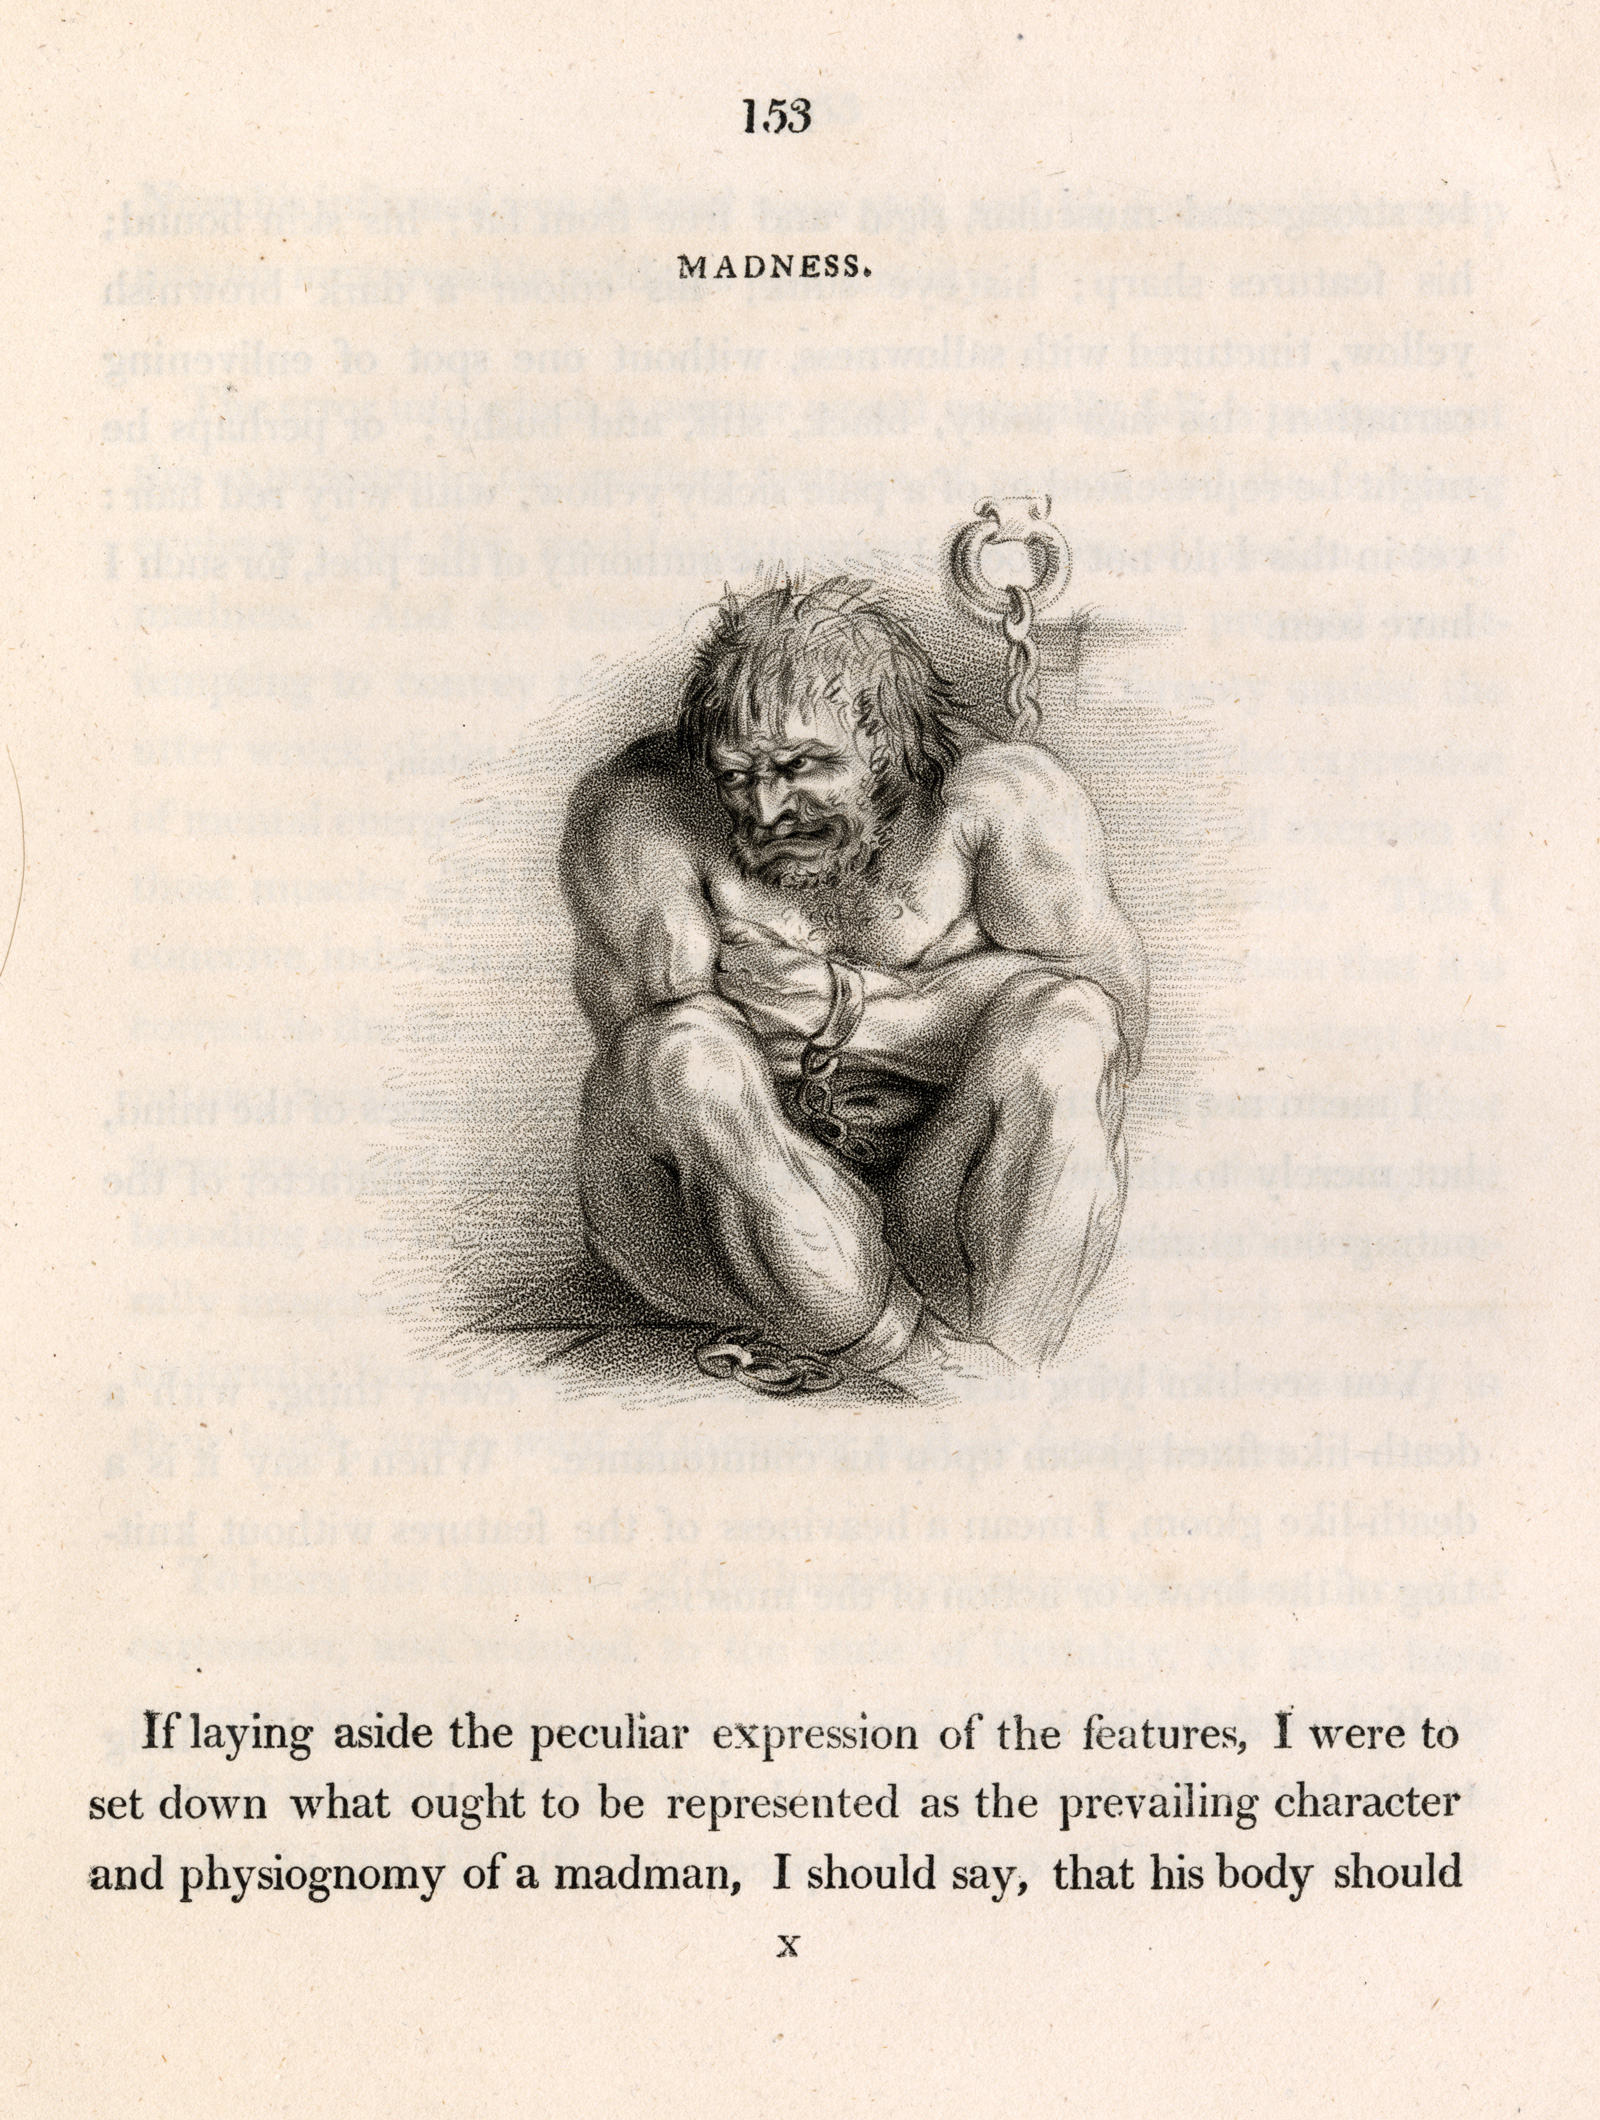 Illustration of an animal-like man